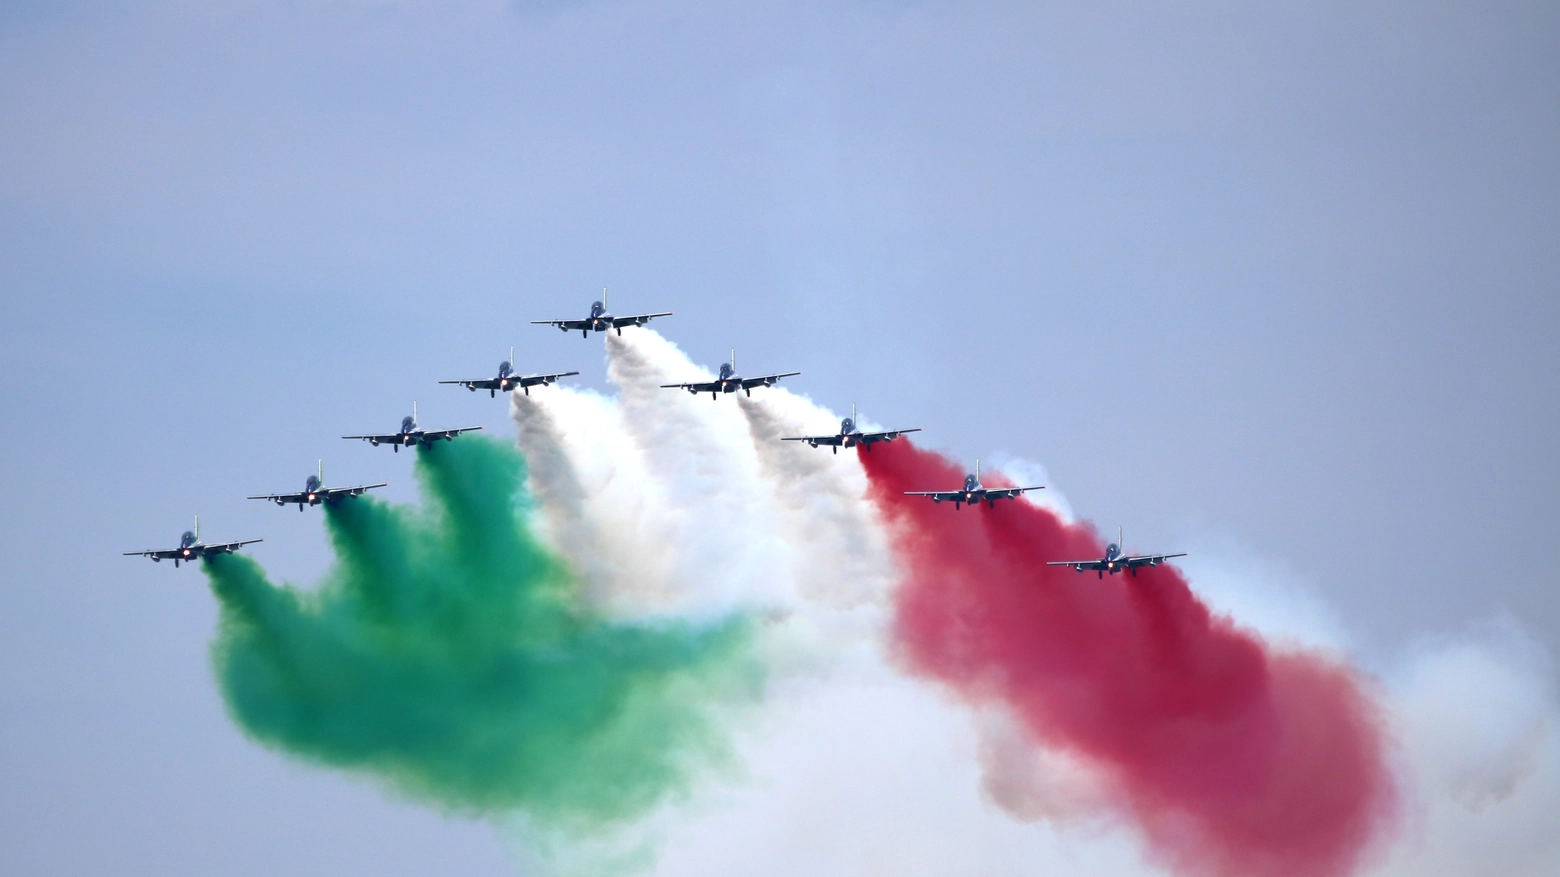 L'Air show a Pisa sarà probabilmente annullato